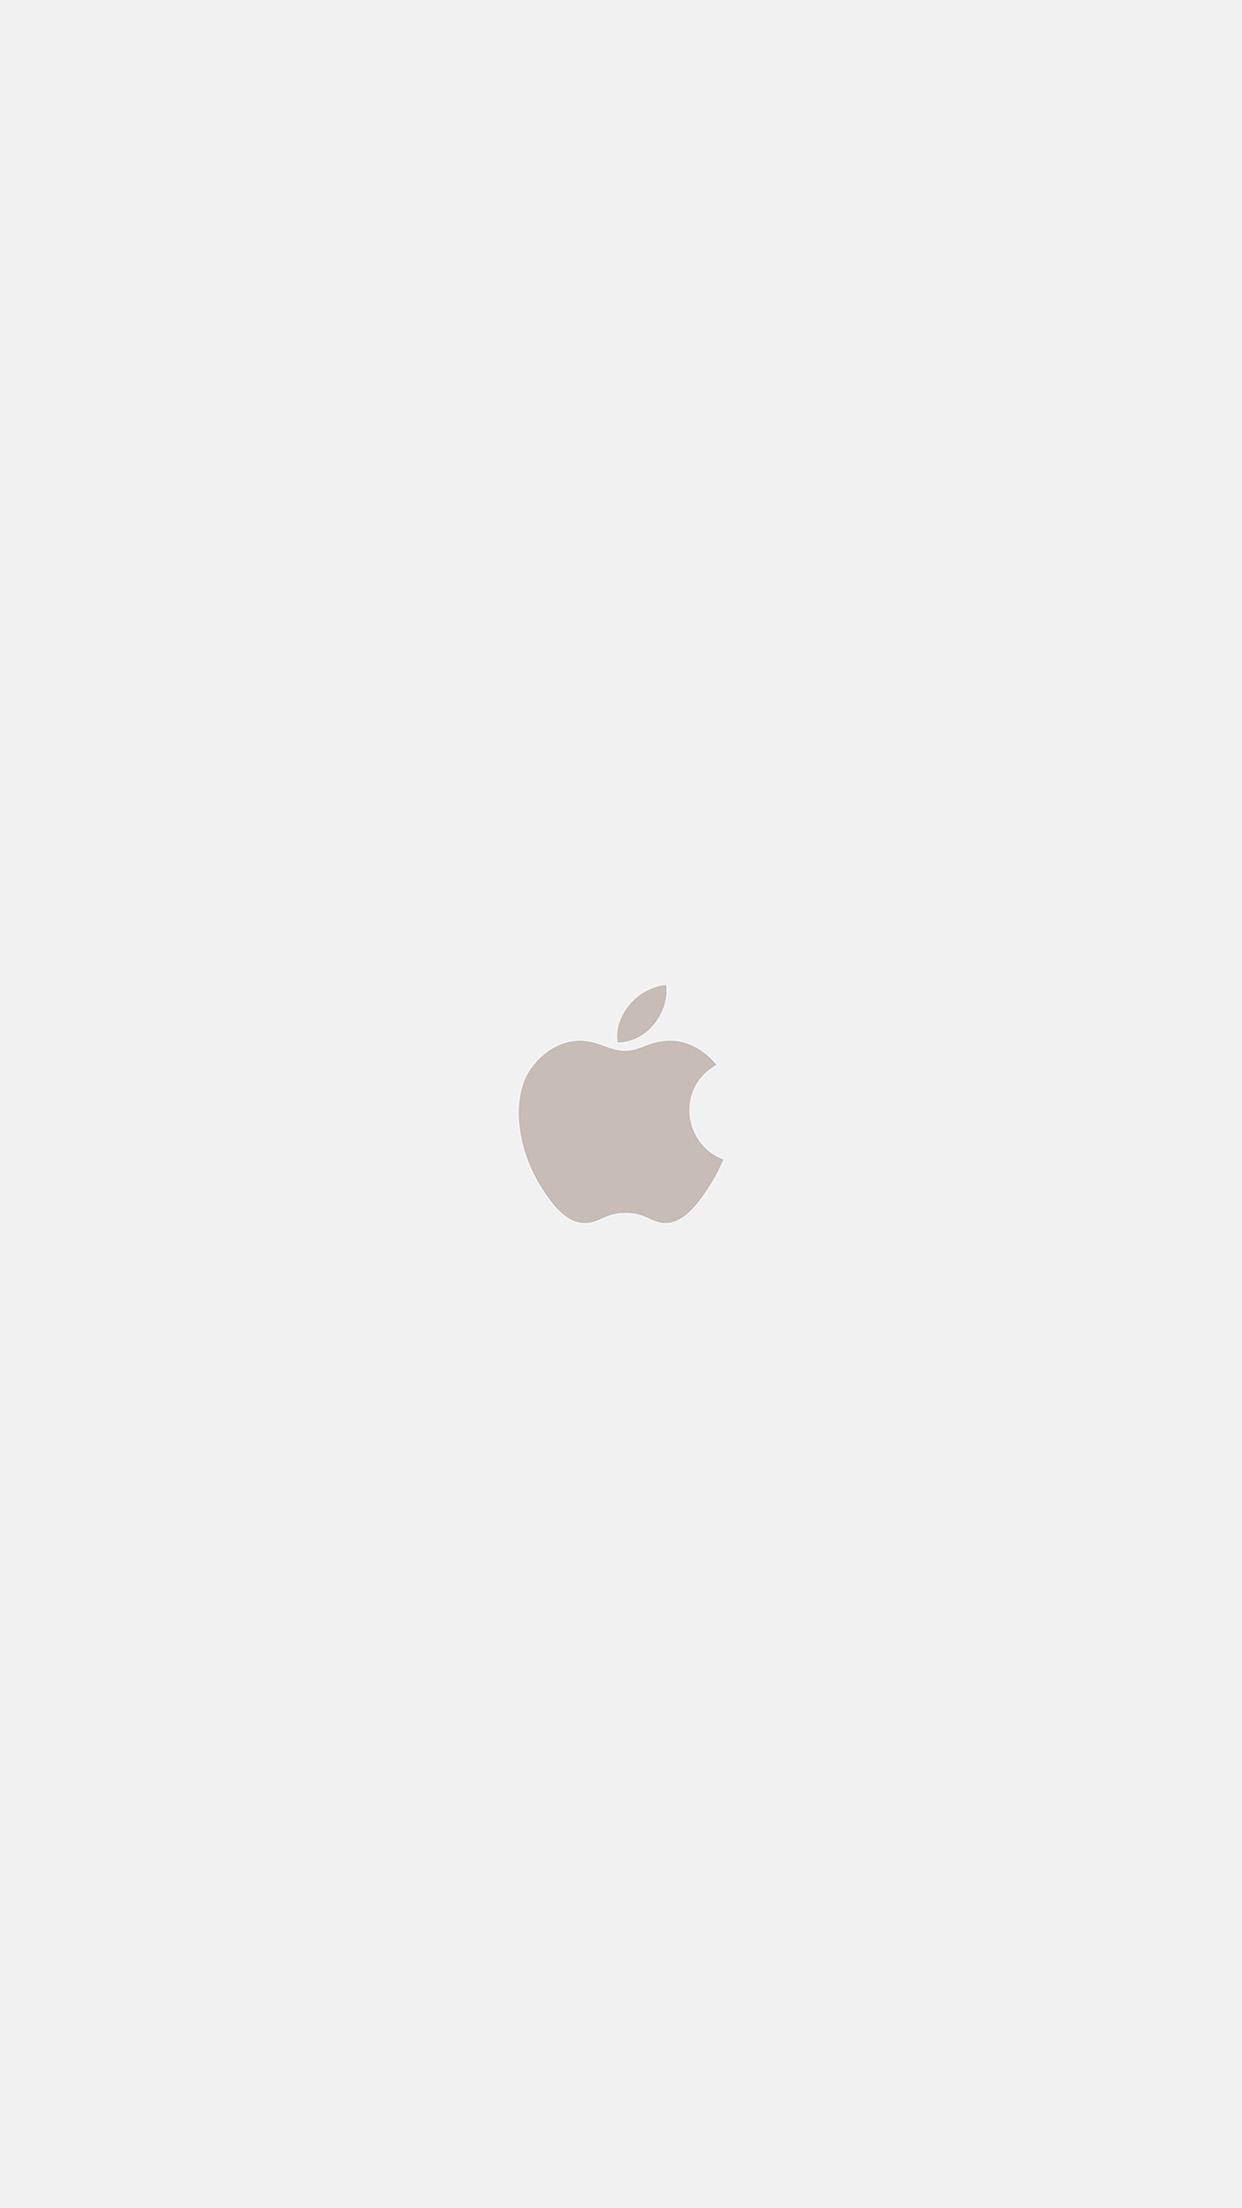 Apple Phone HD Symbol Wallpapers - Wallpaper Cave